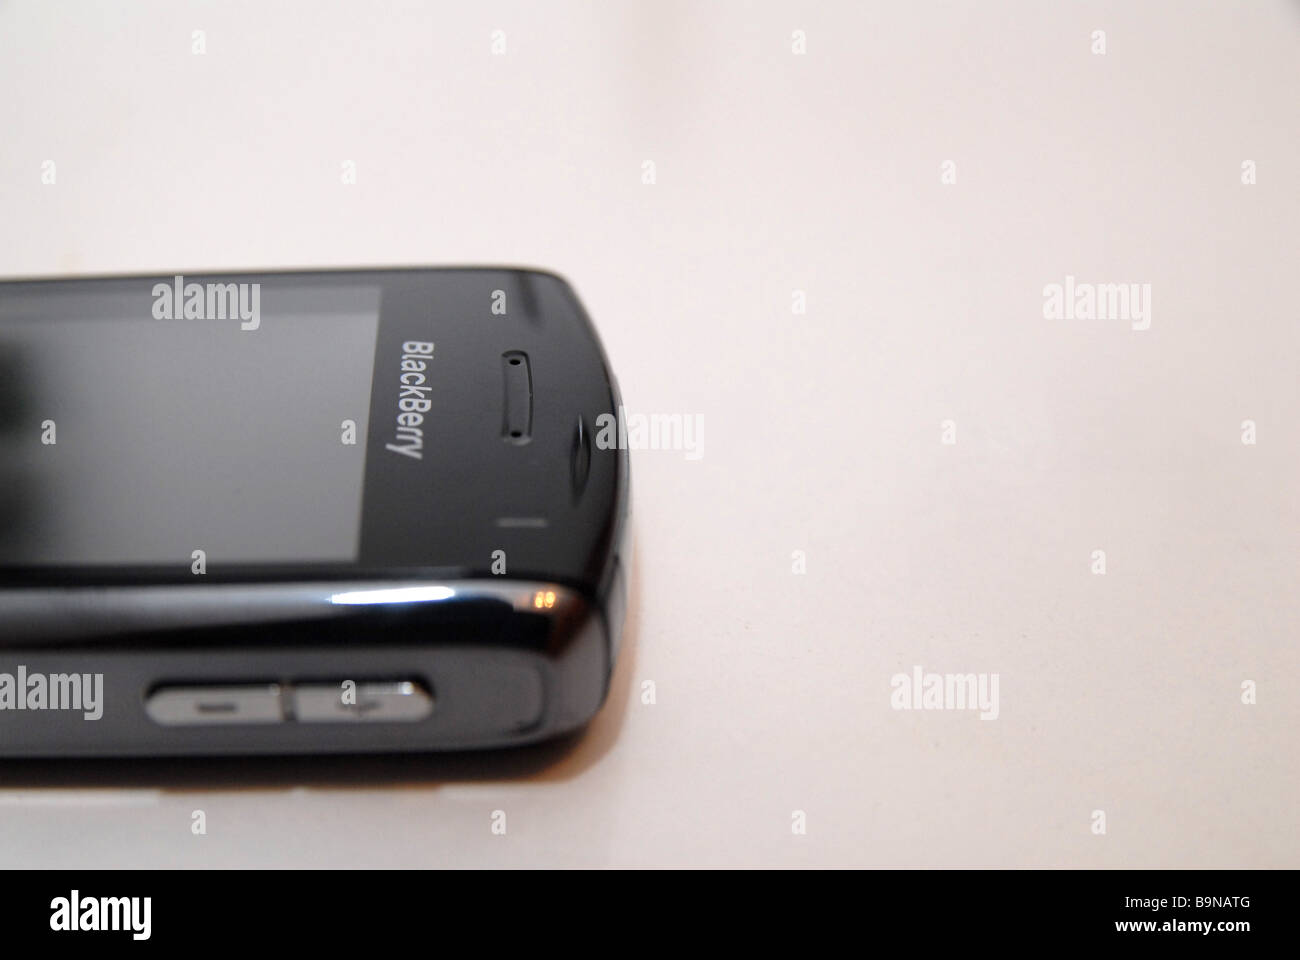 A Blackbery mobile phone/device Stock Photo